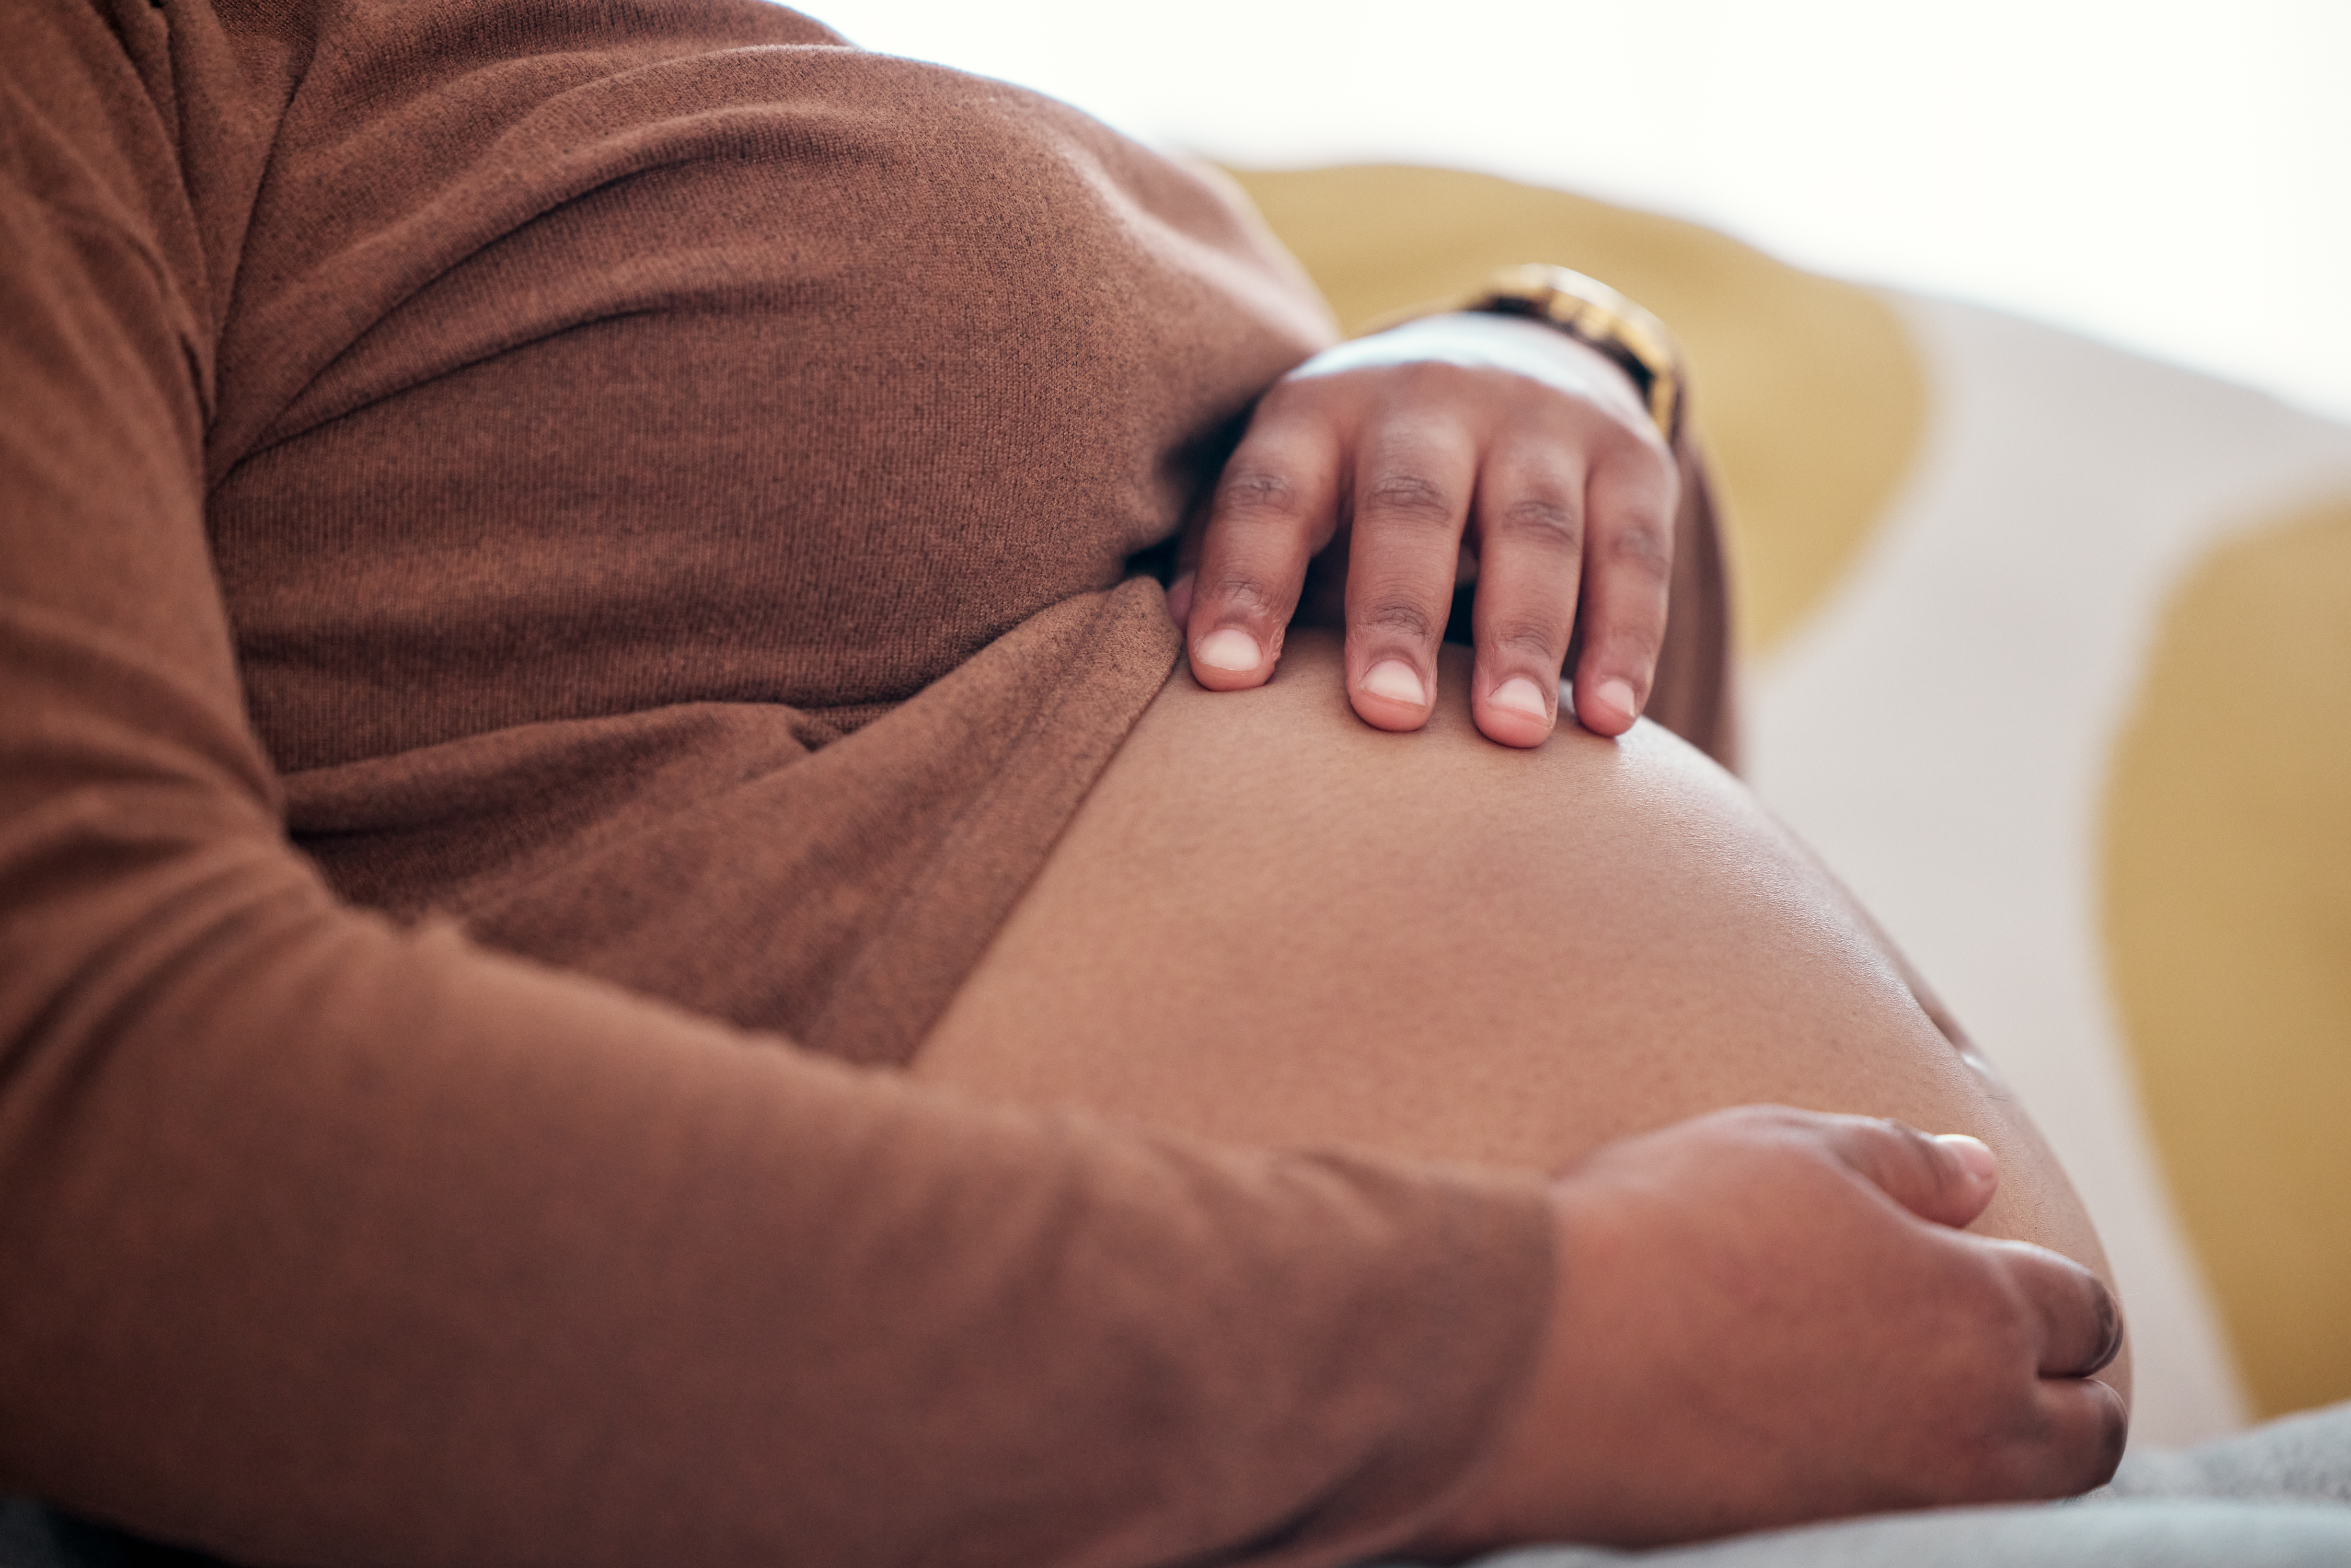 NEWSLINE: American women are having shorter pregnancies